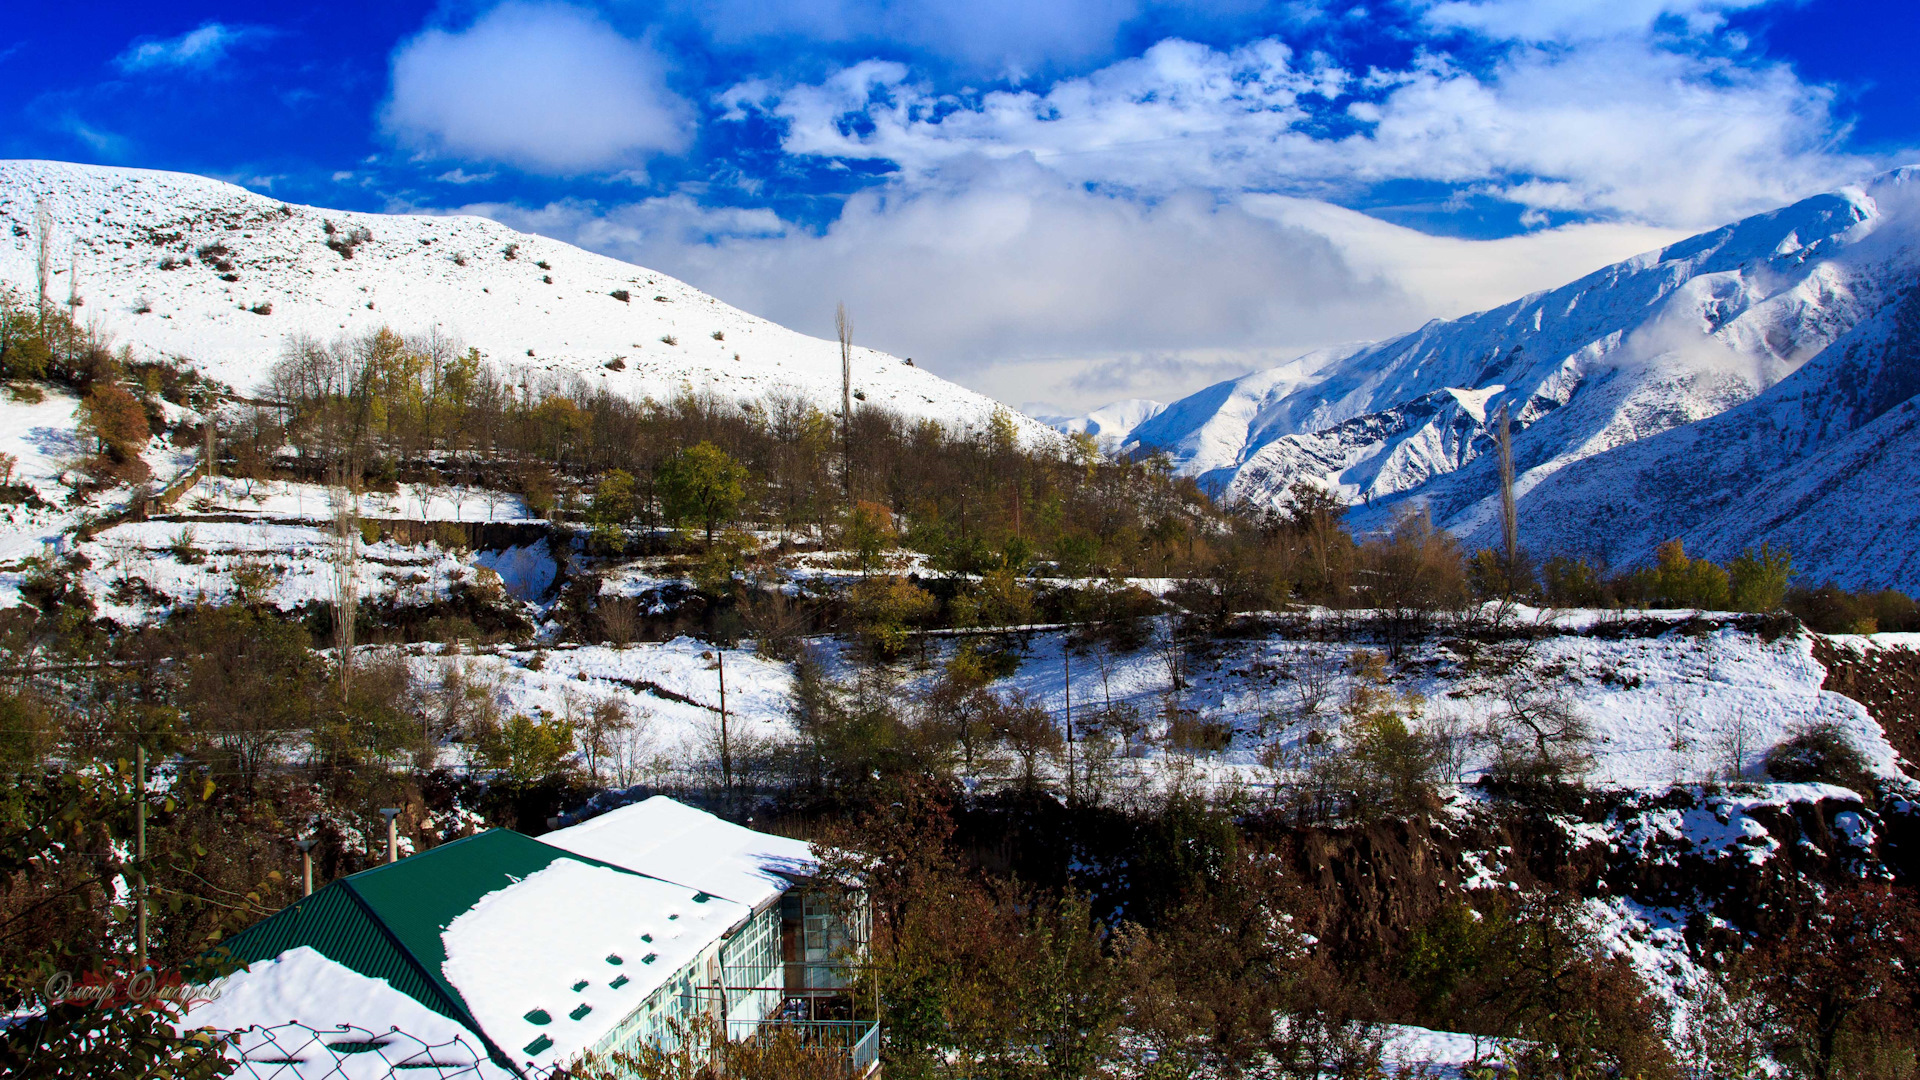 Заснеженные горы Дагестана